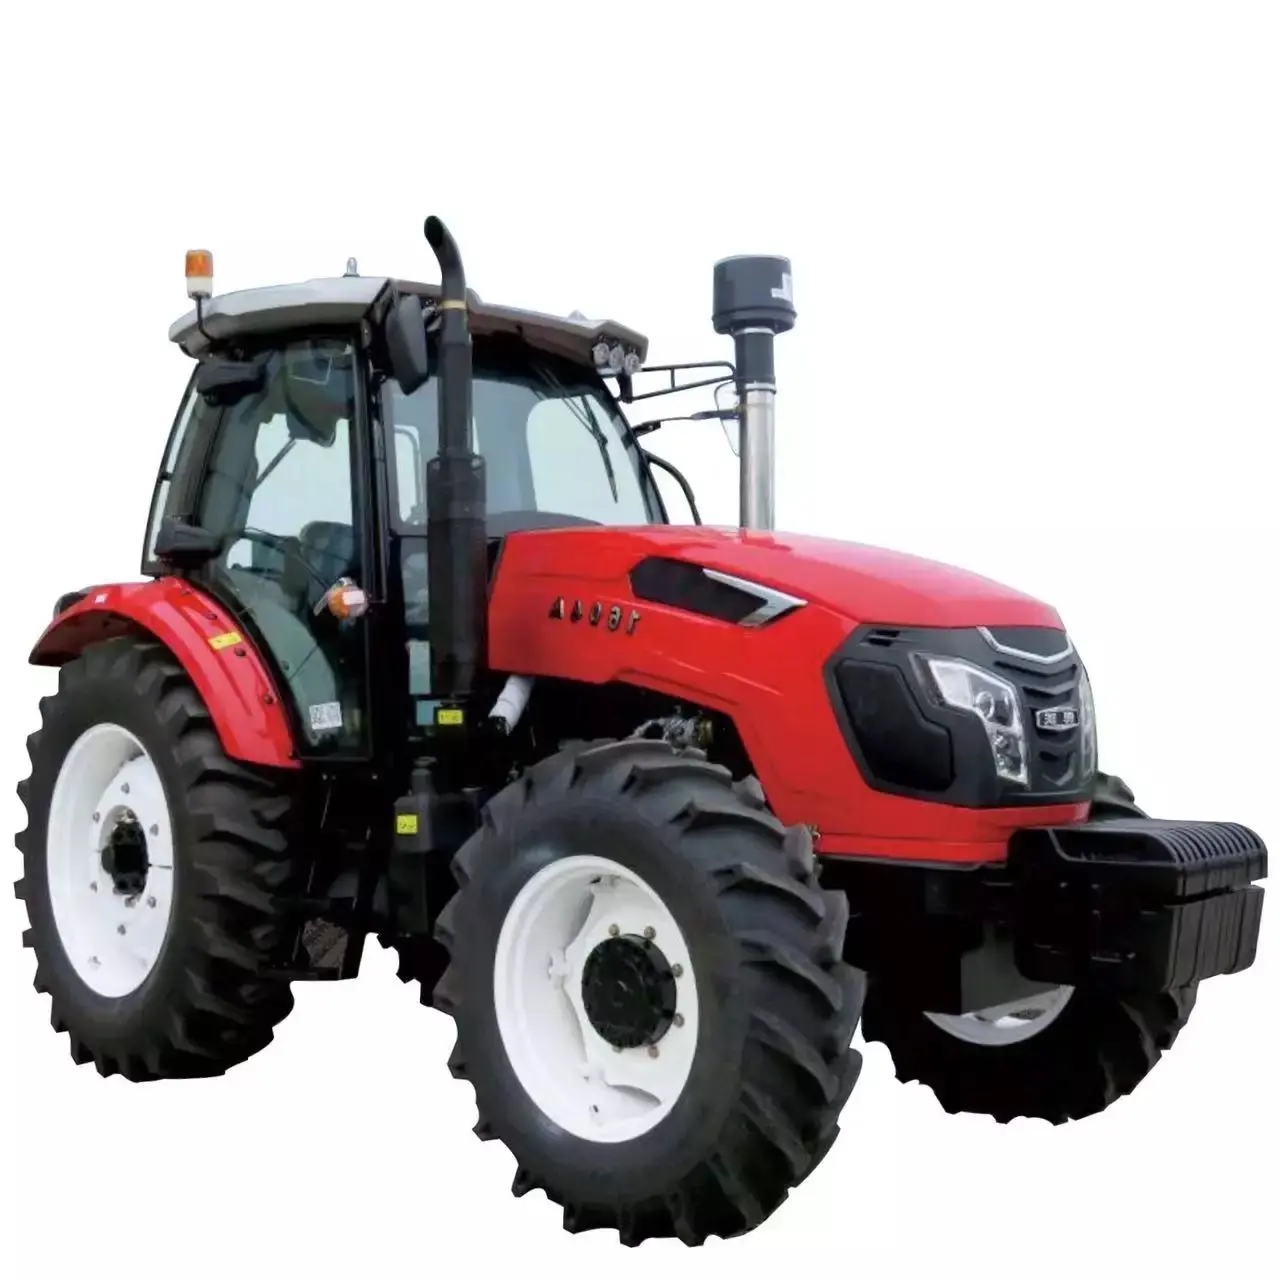 KUBOTA-tractores agrícolas de buena agricultura, tractores de granja compacta, 4x4